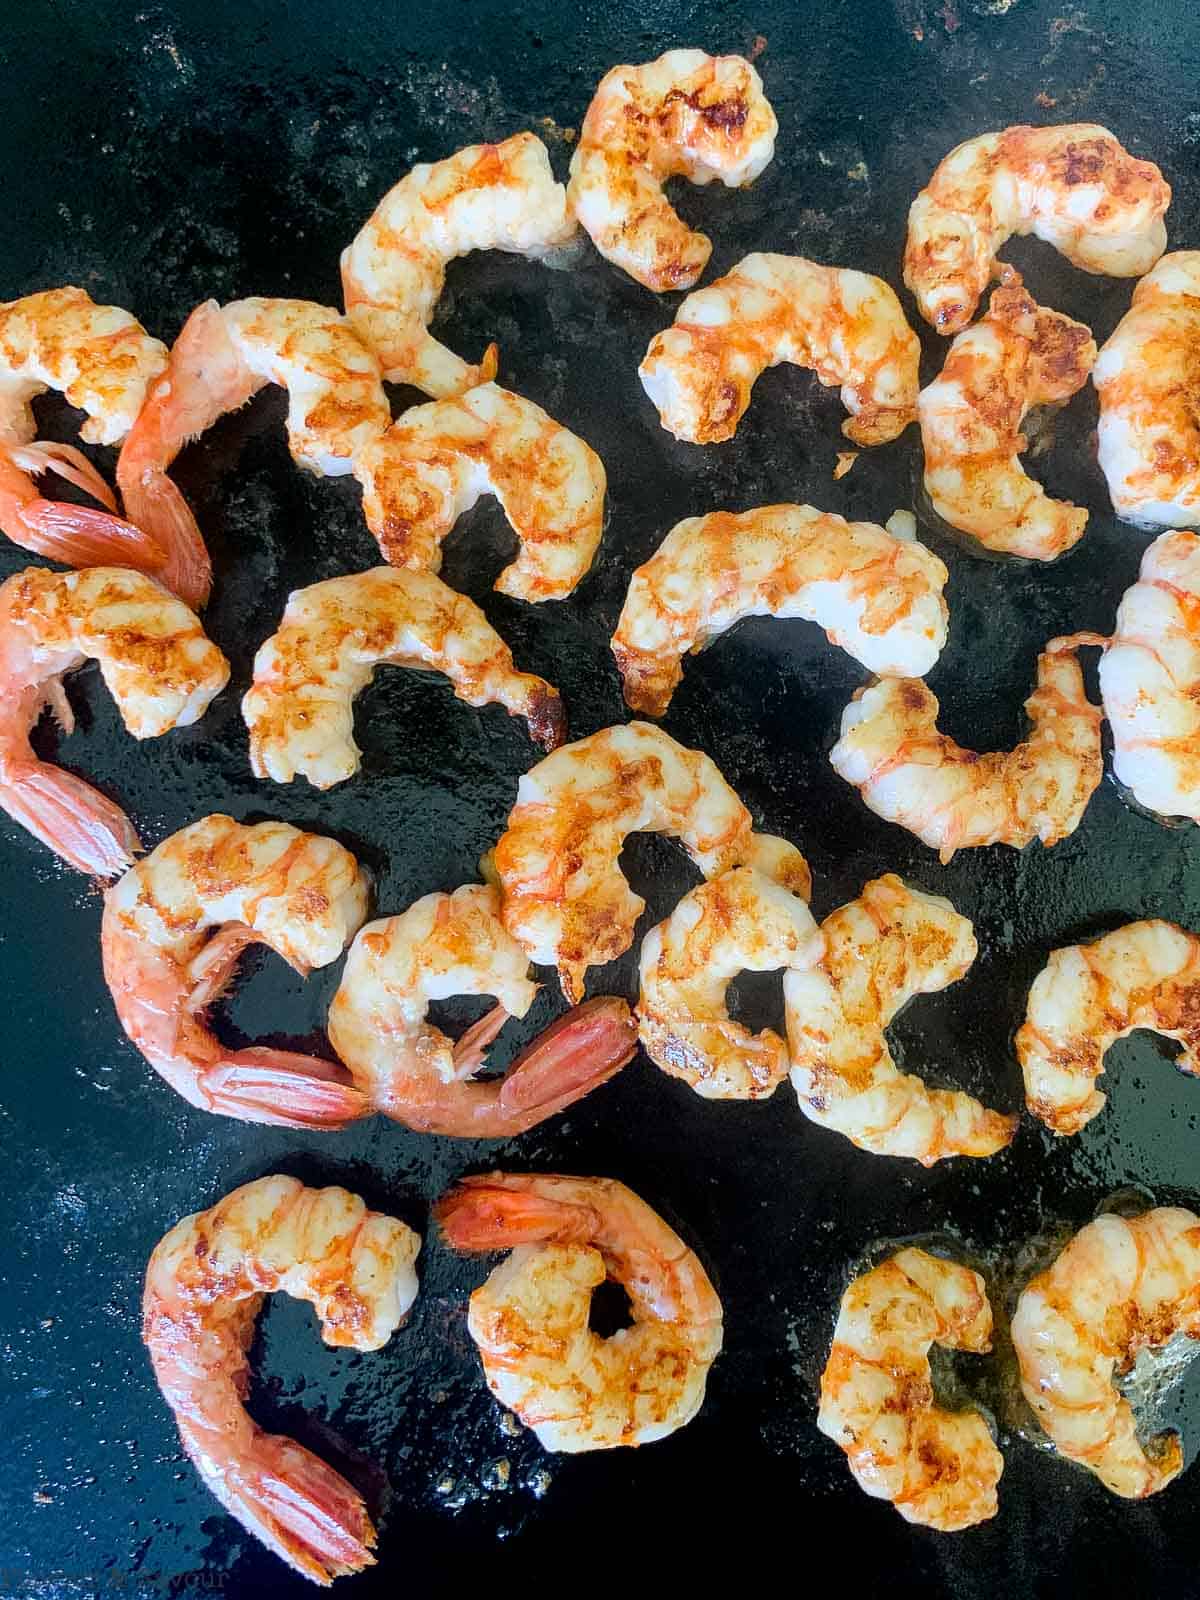 Grilled Prawns or shrimp on a flat grill